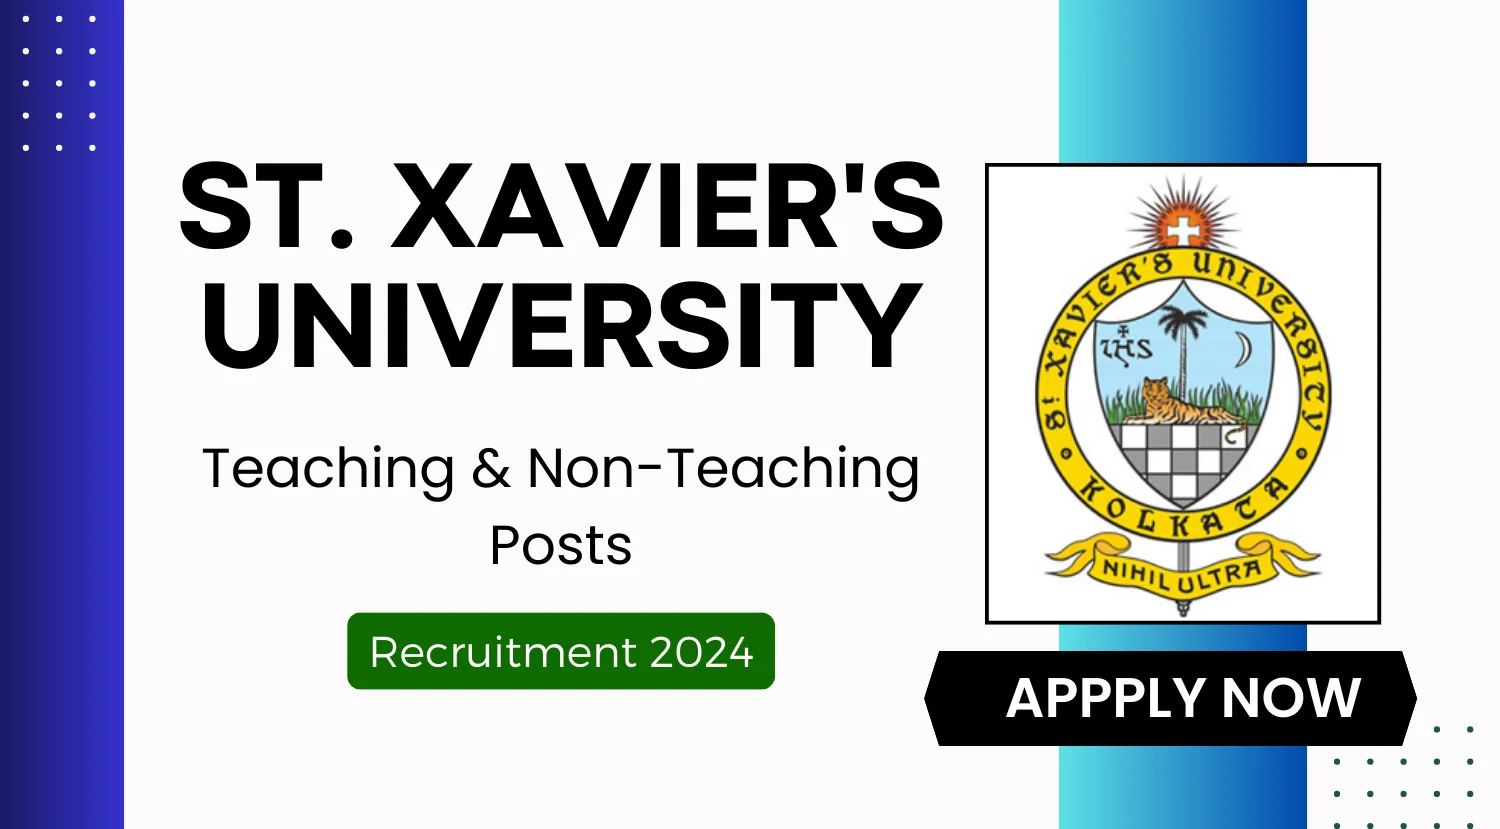 St. Xavier's University Recruitment 2024